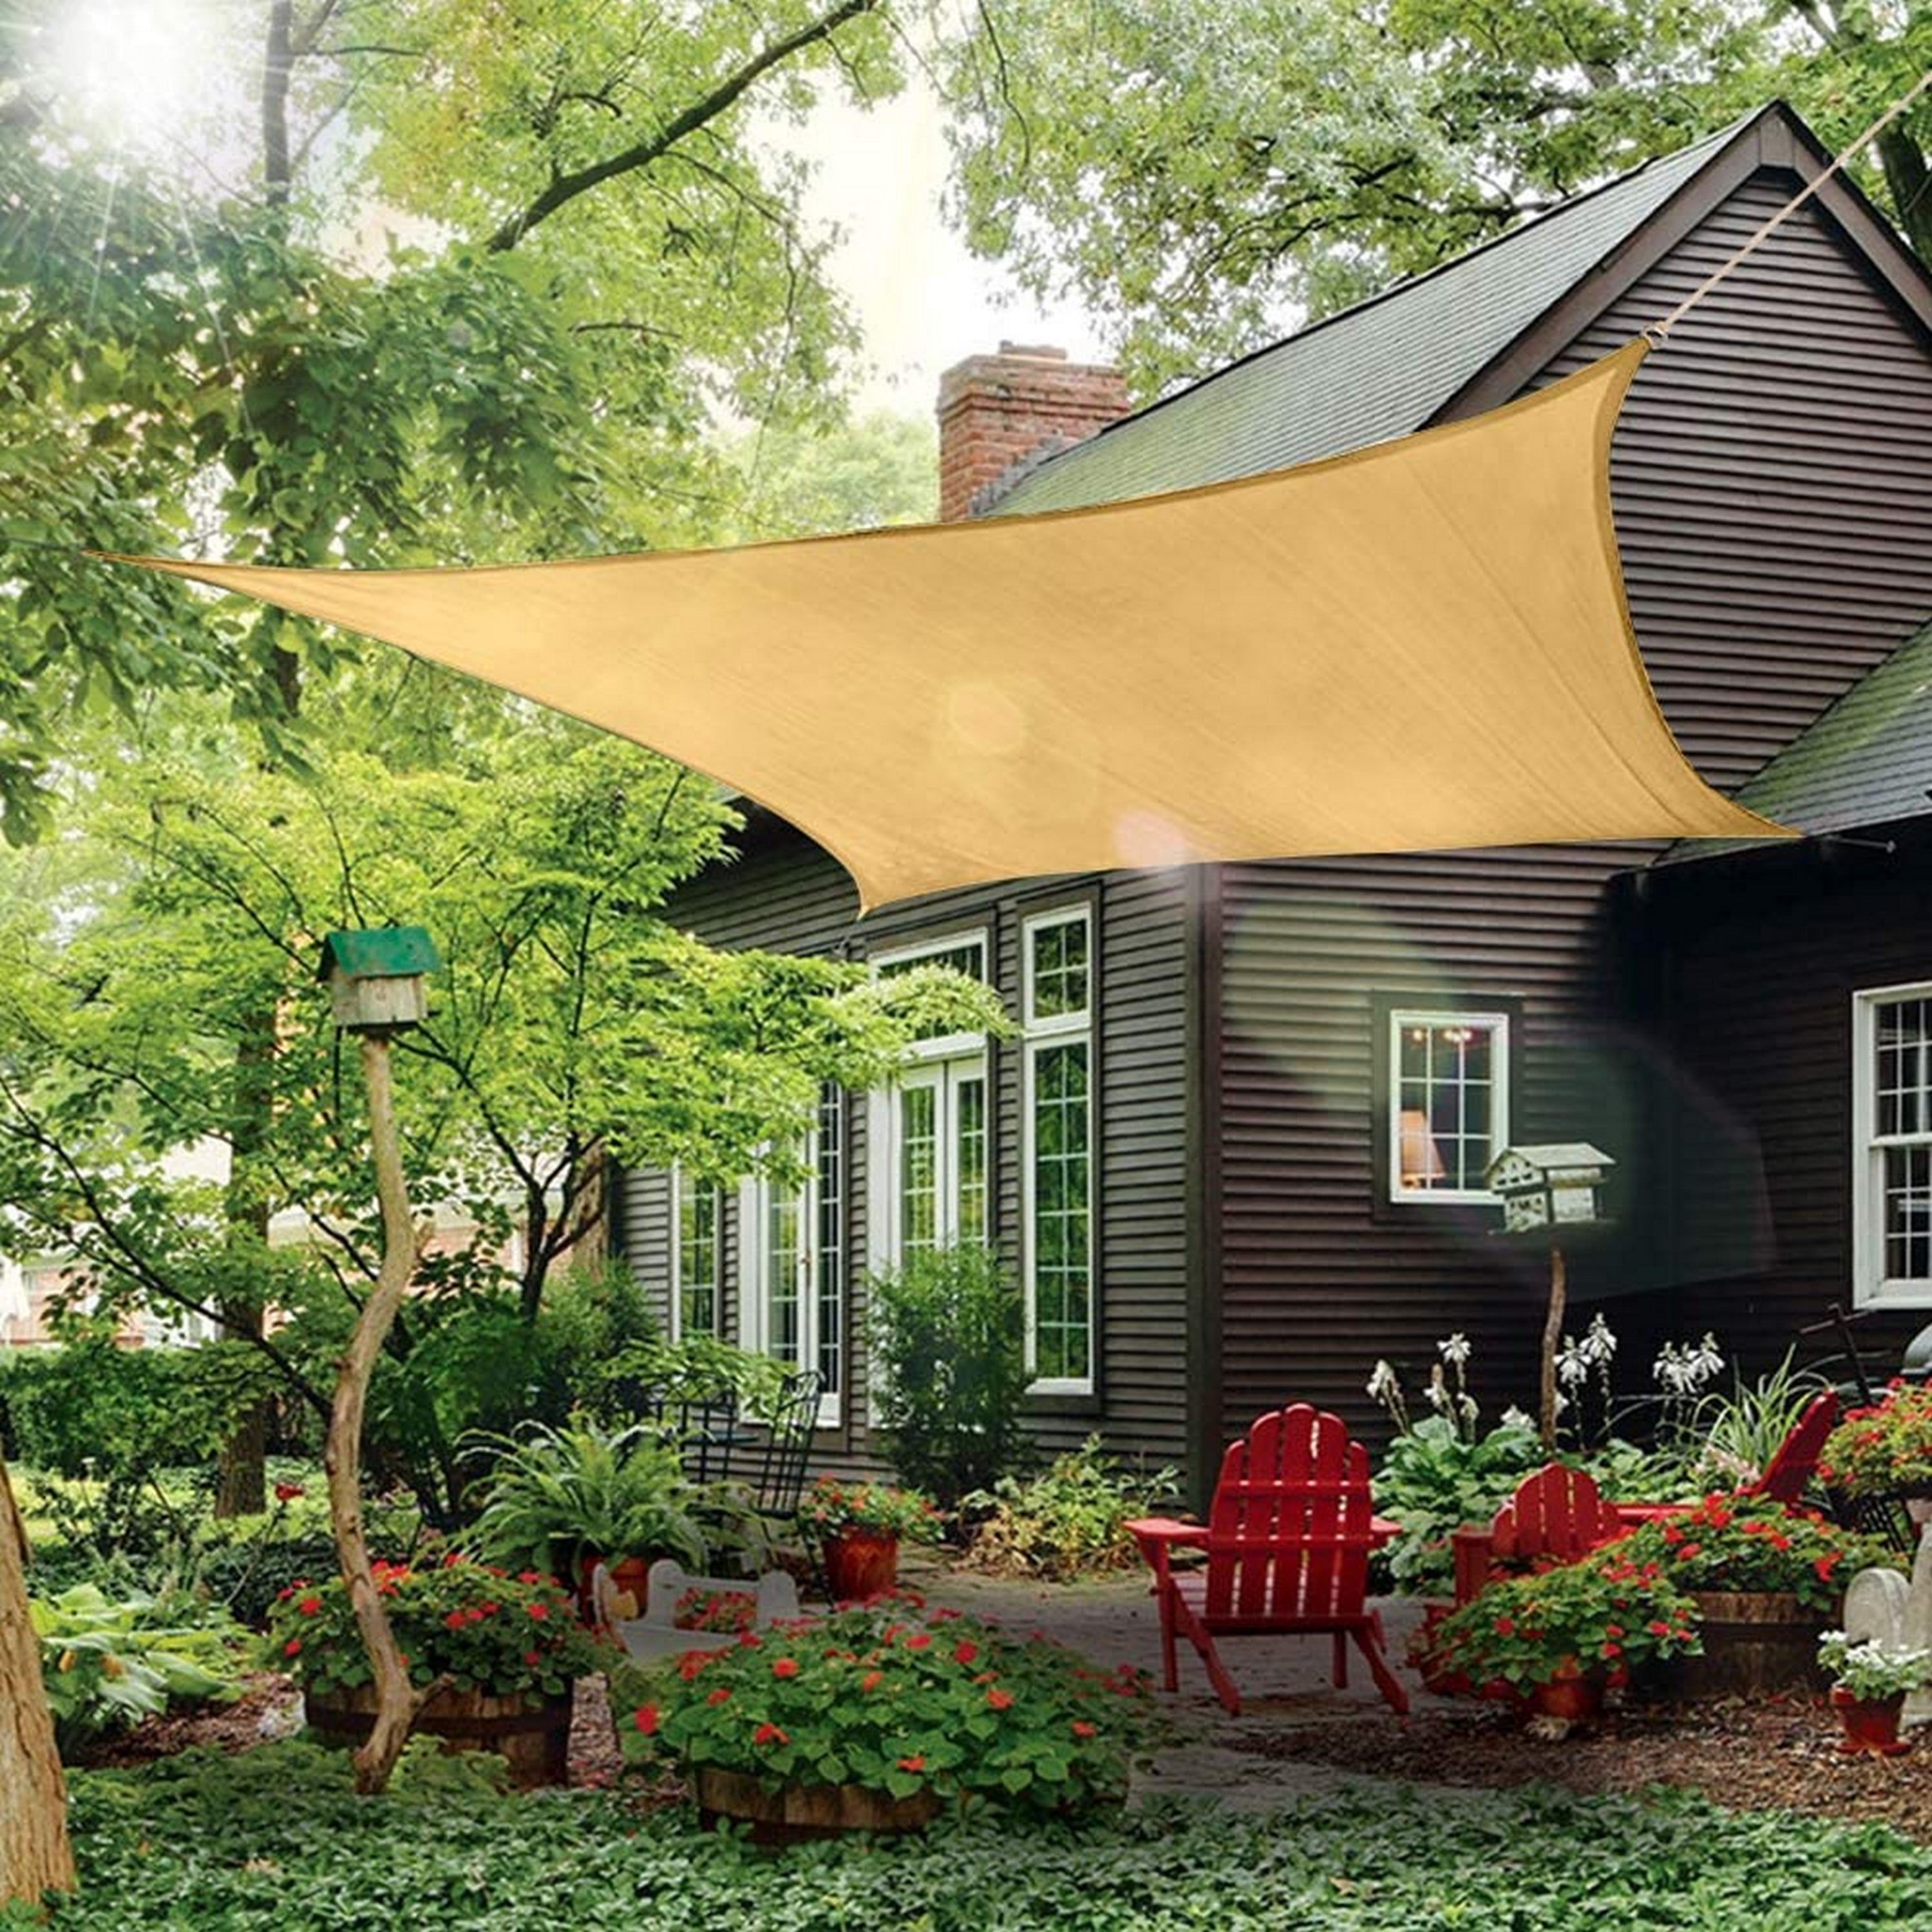 Grey Color Outdoor Sun Shade Sail Canopy Patio Cover Awning Shelter for Pergola Backyard Garden Yard 8 x 12 Rectangle Shade Cloth UV Block Sunshade Fabric